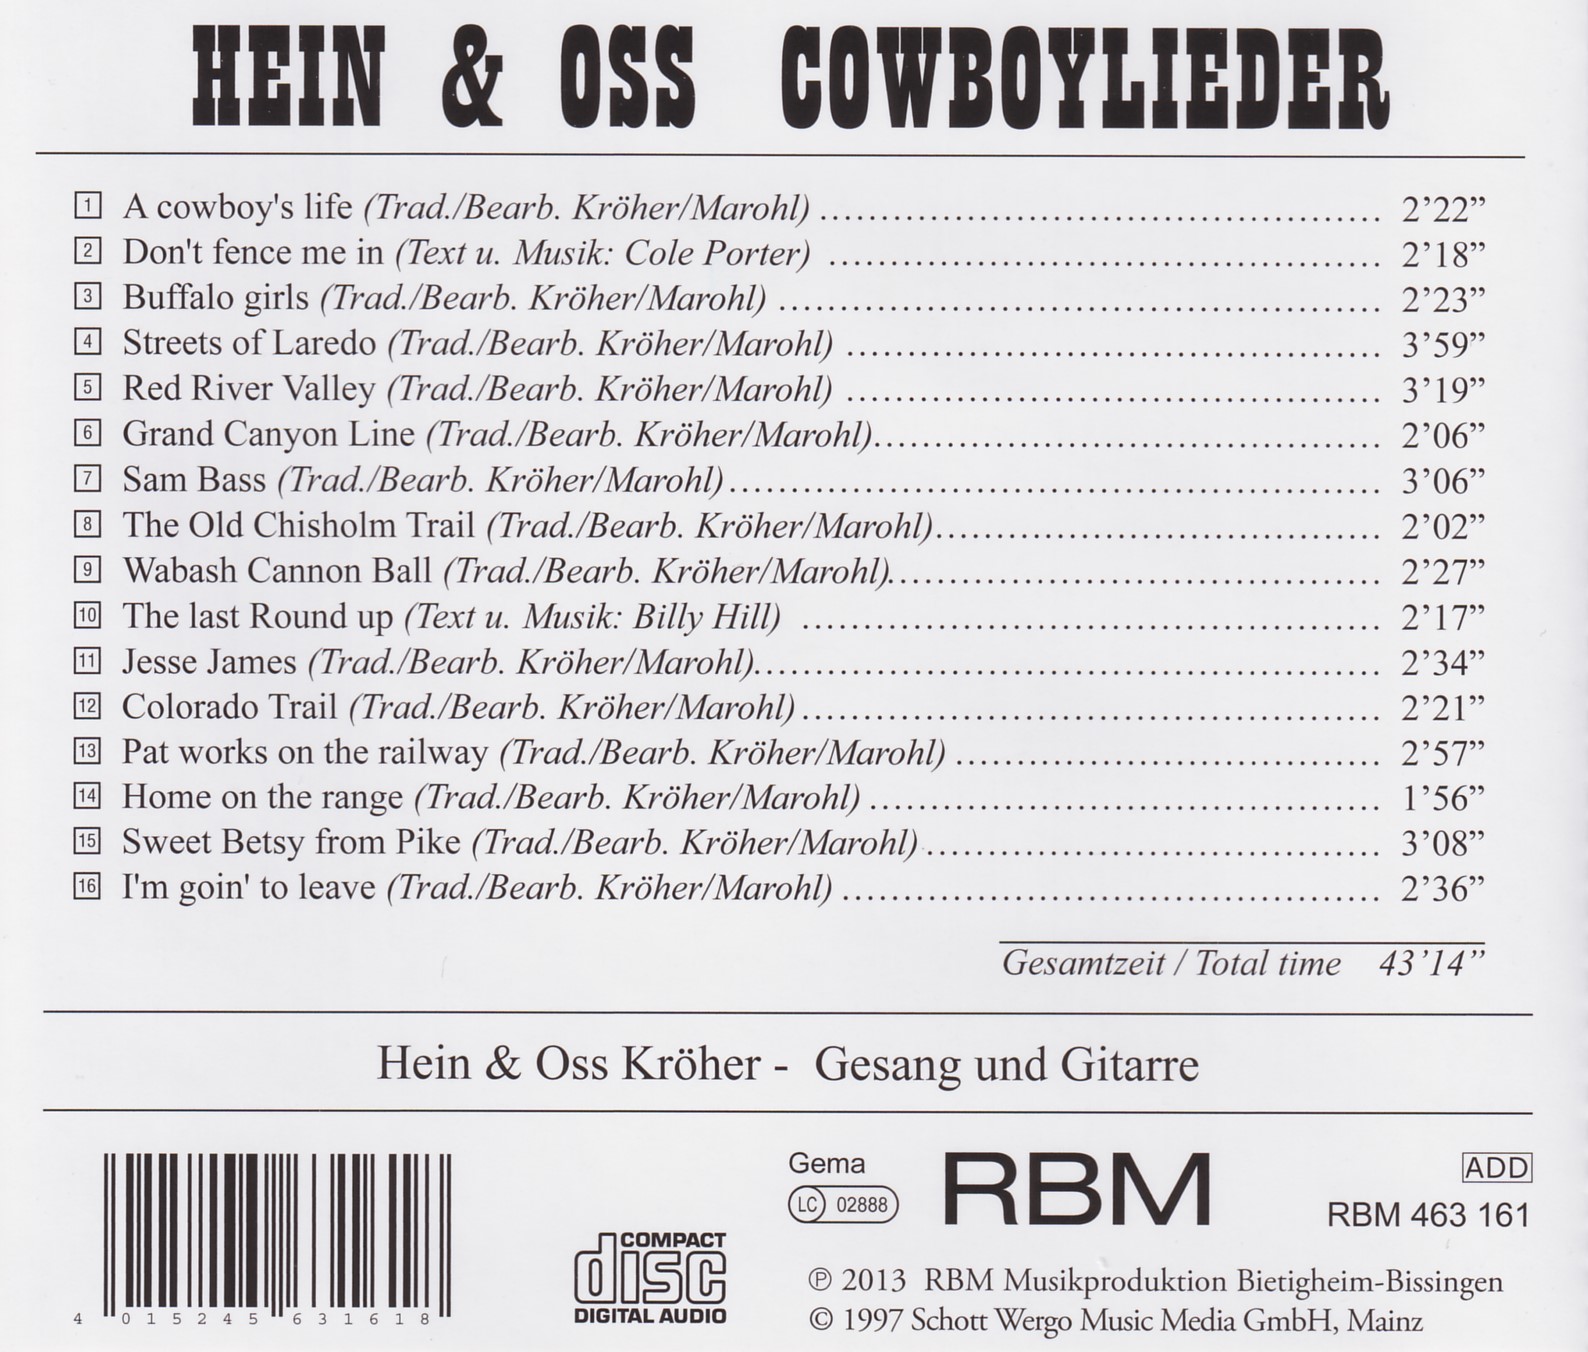 Hein & Oss Cowboylieder